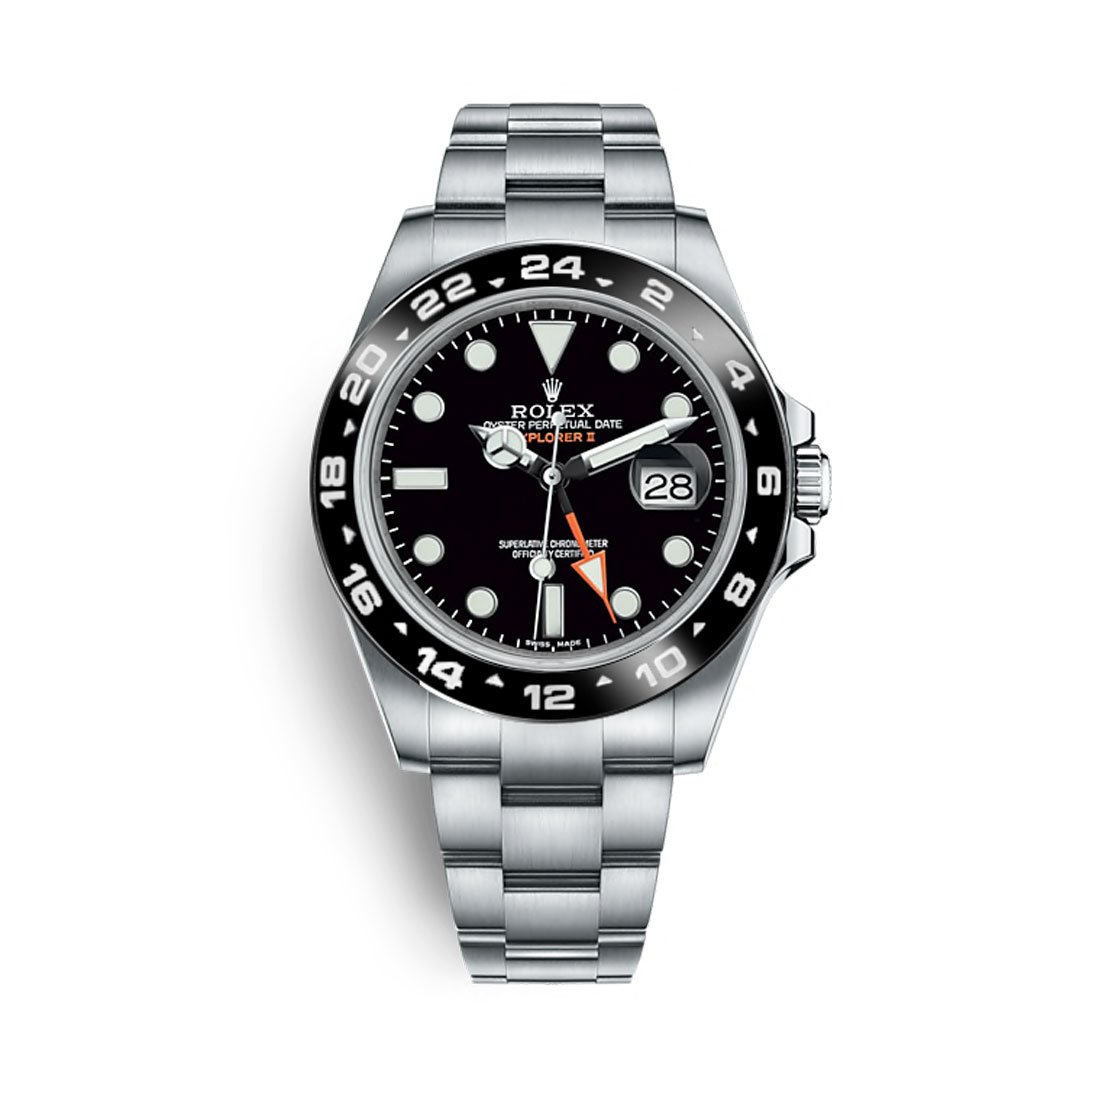 new Rolex Explorer watches in 2021 